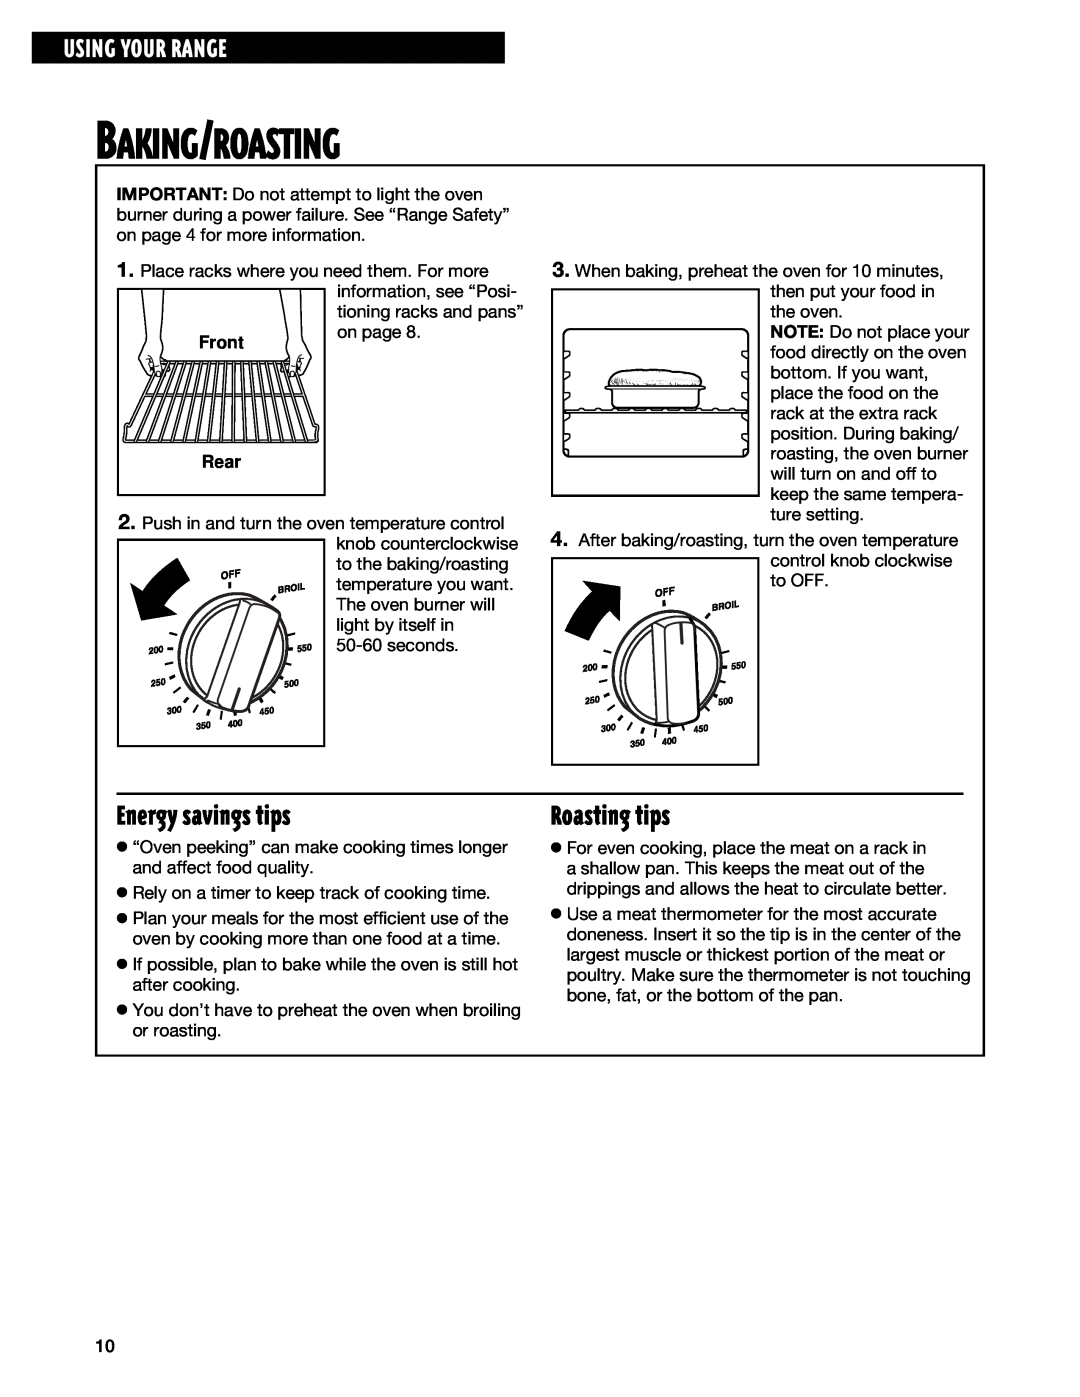 Whirlpool TGP325E manual Energy savings tips, Roasting tips, Baking/Roasting, Using Your Range, Front Rear 